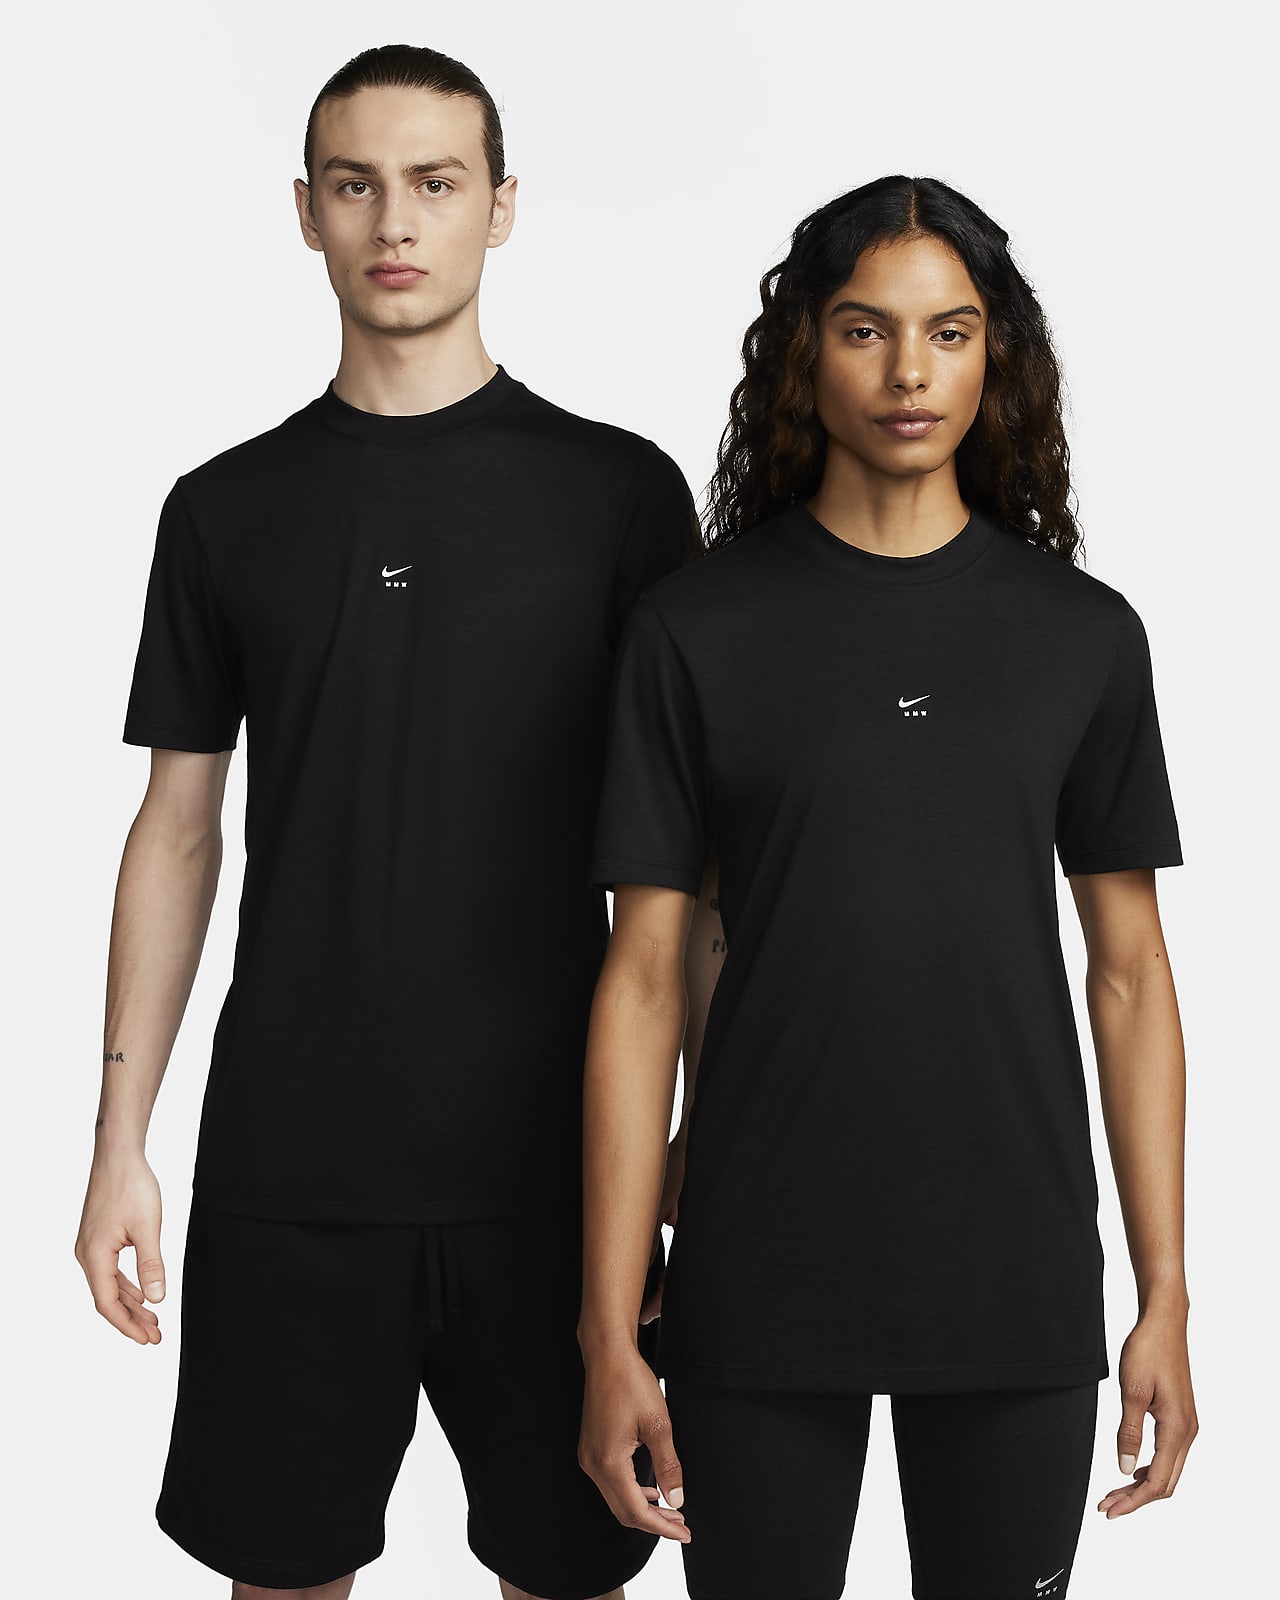 Pánské tričko Nike x MMW s krátkým rukávem